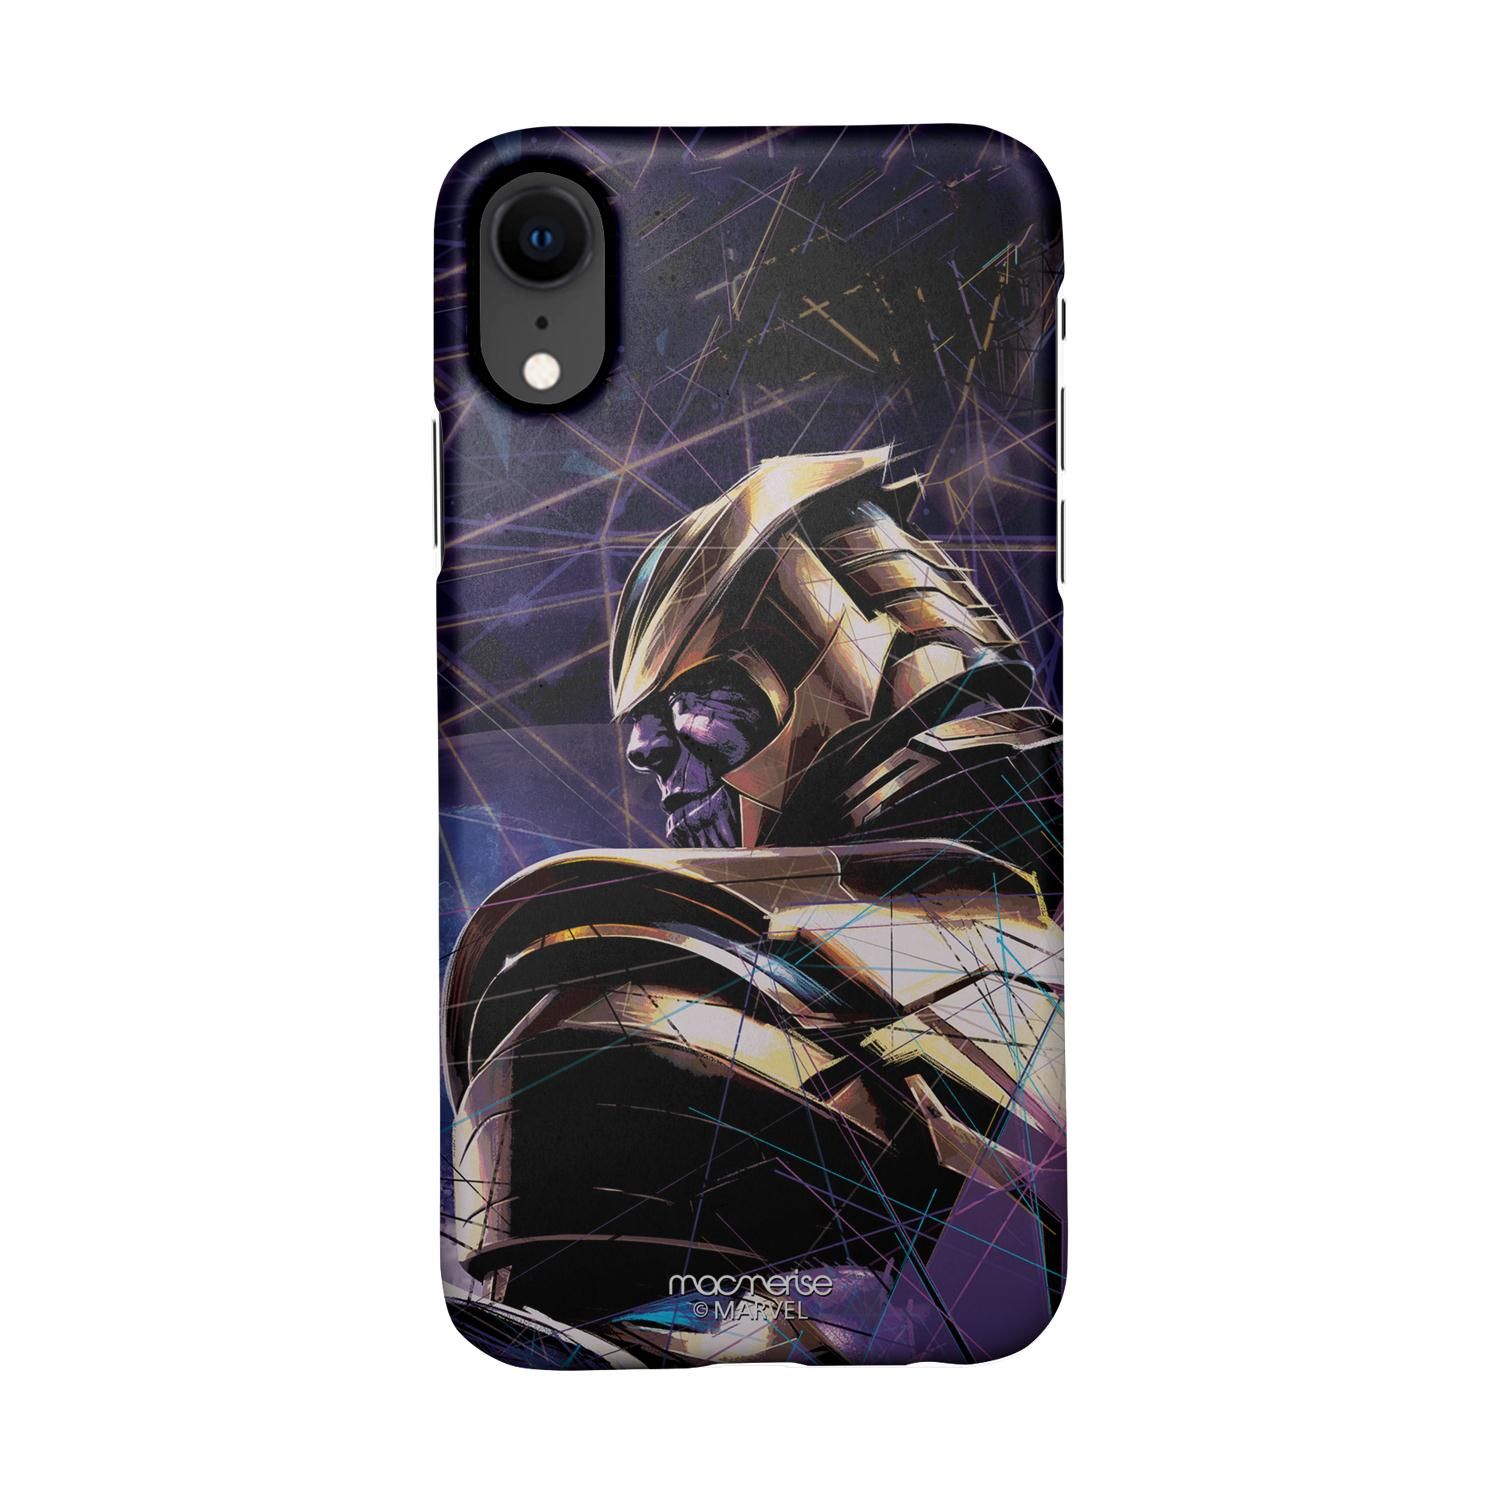 Buy Thanos on Edge - Sleek Phone Case for iPhone XR Online